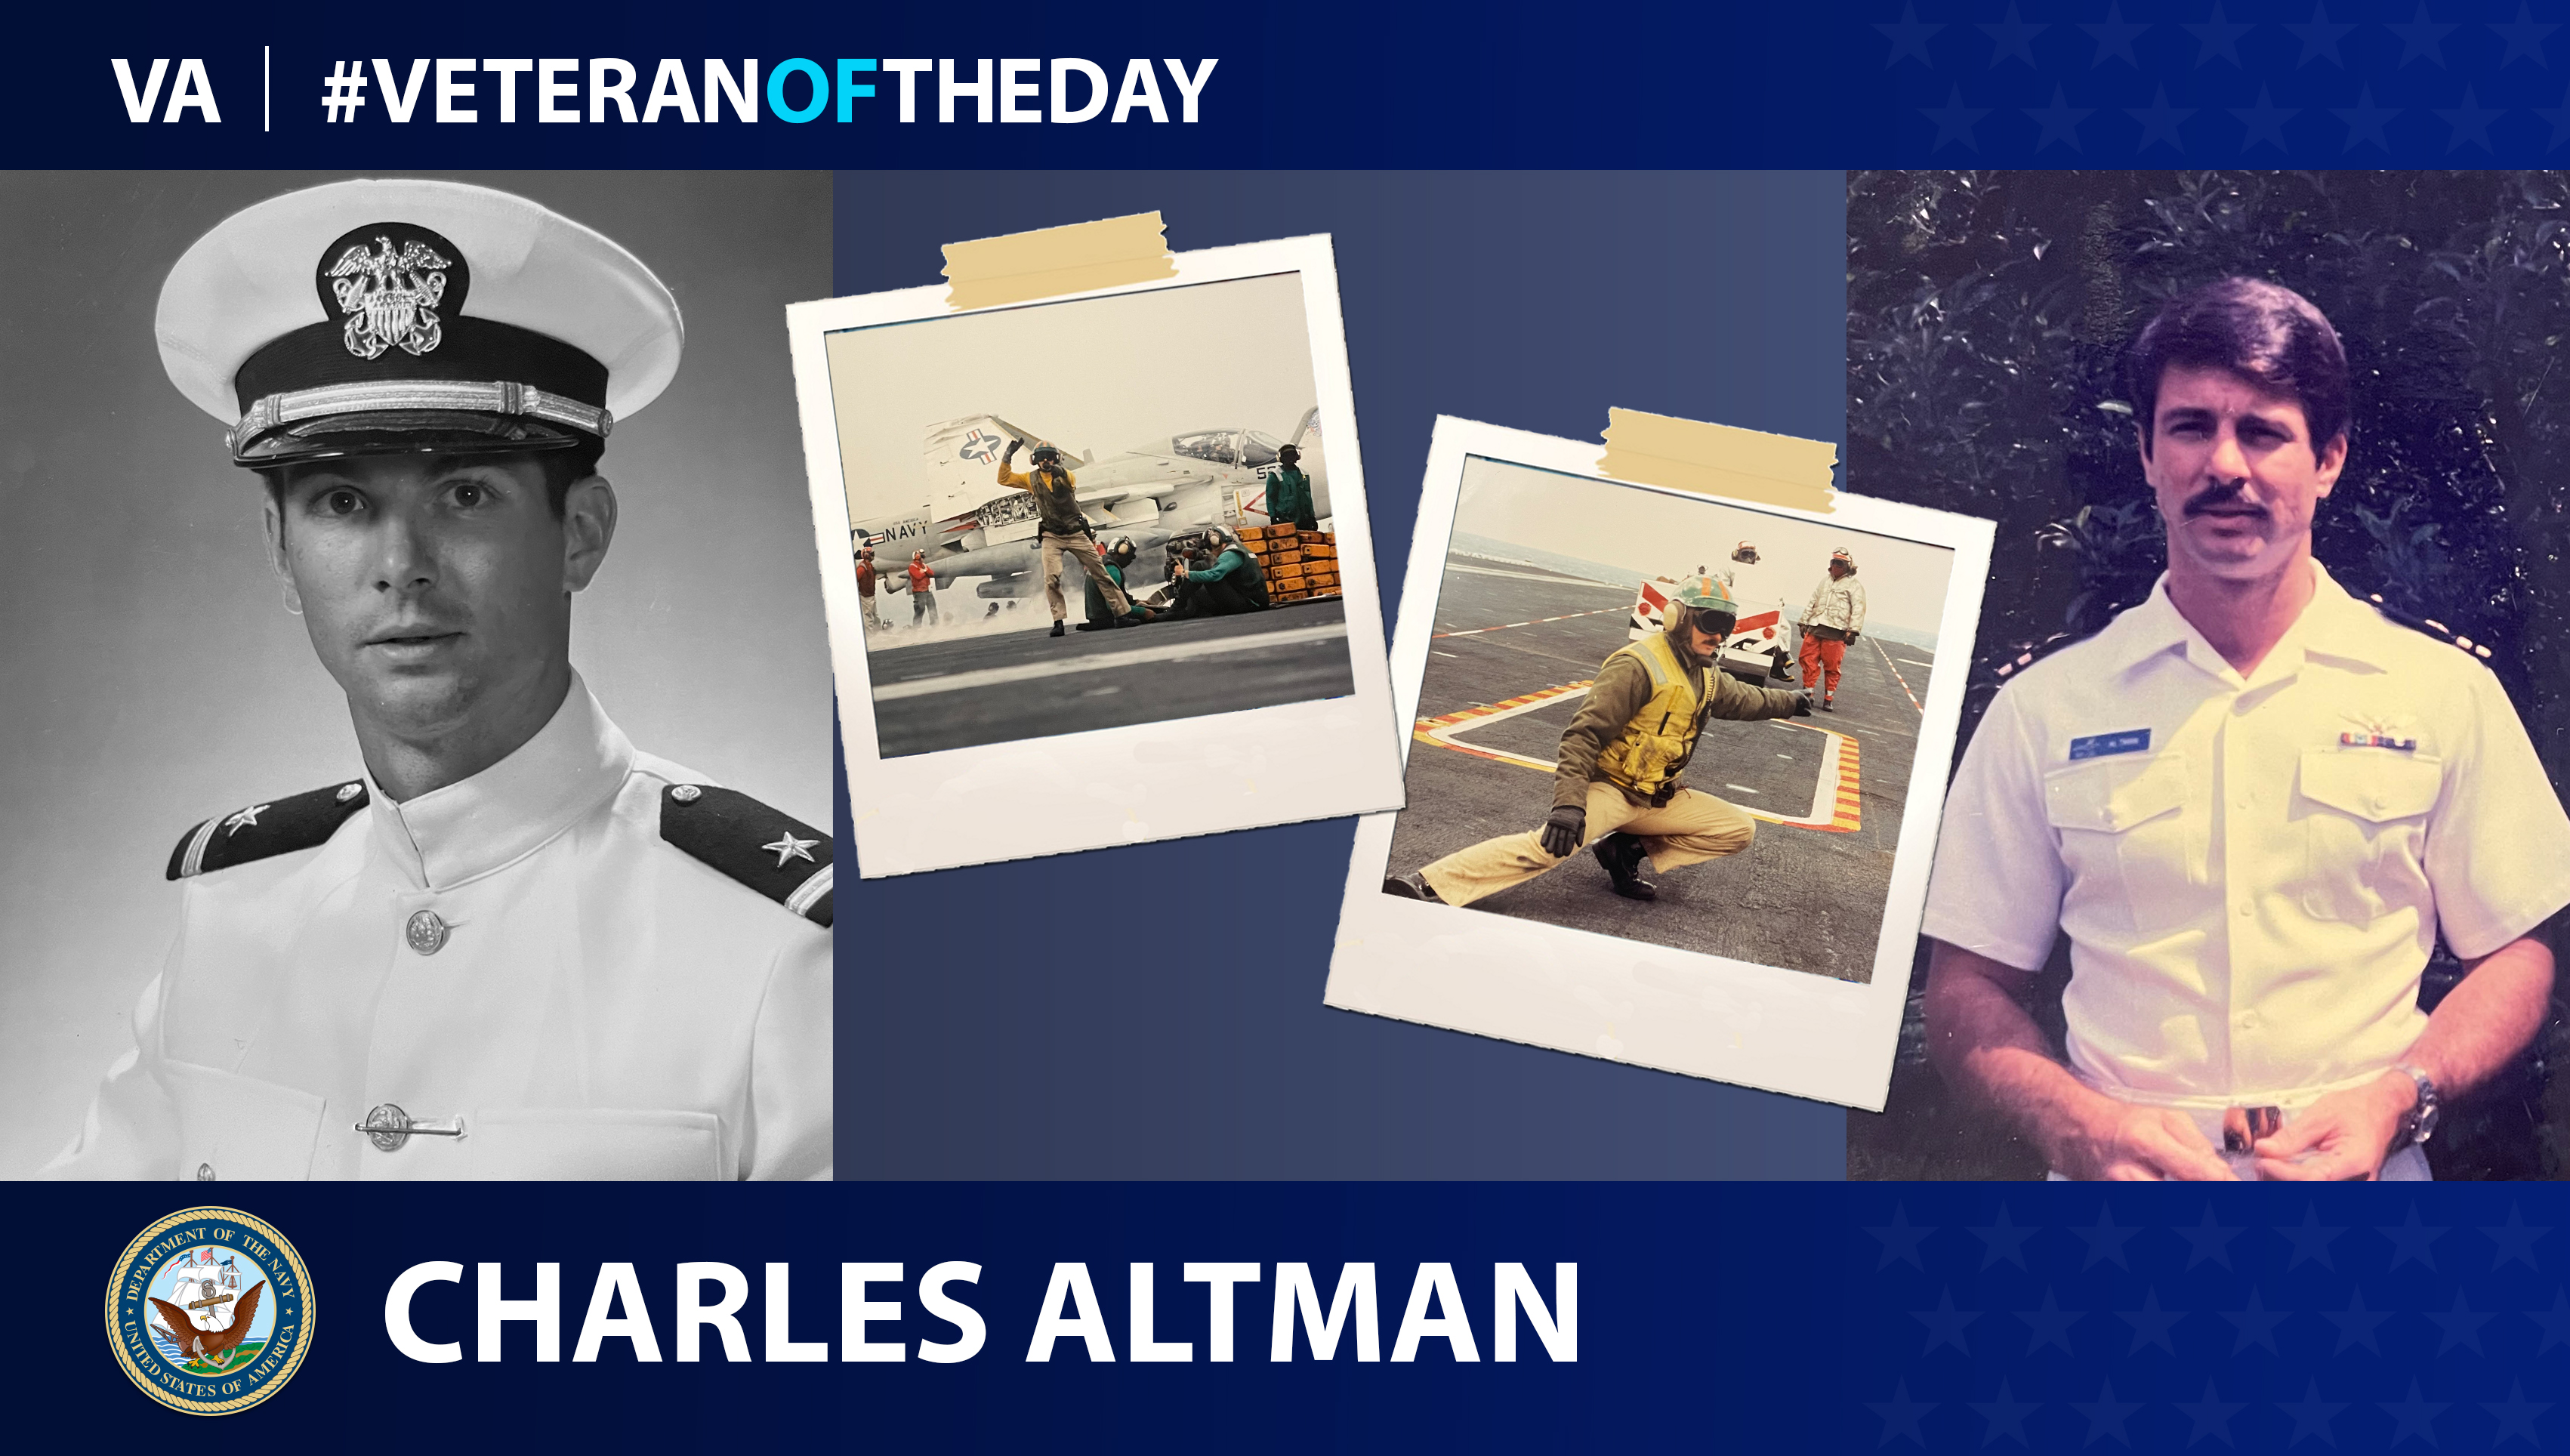 Navy Veteran Charles Altman is today's Veteran of the day.